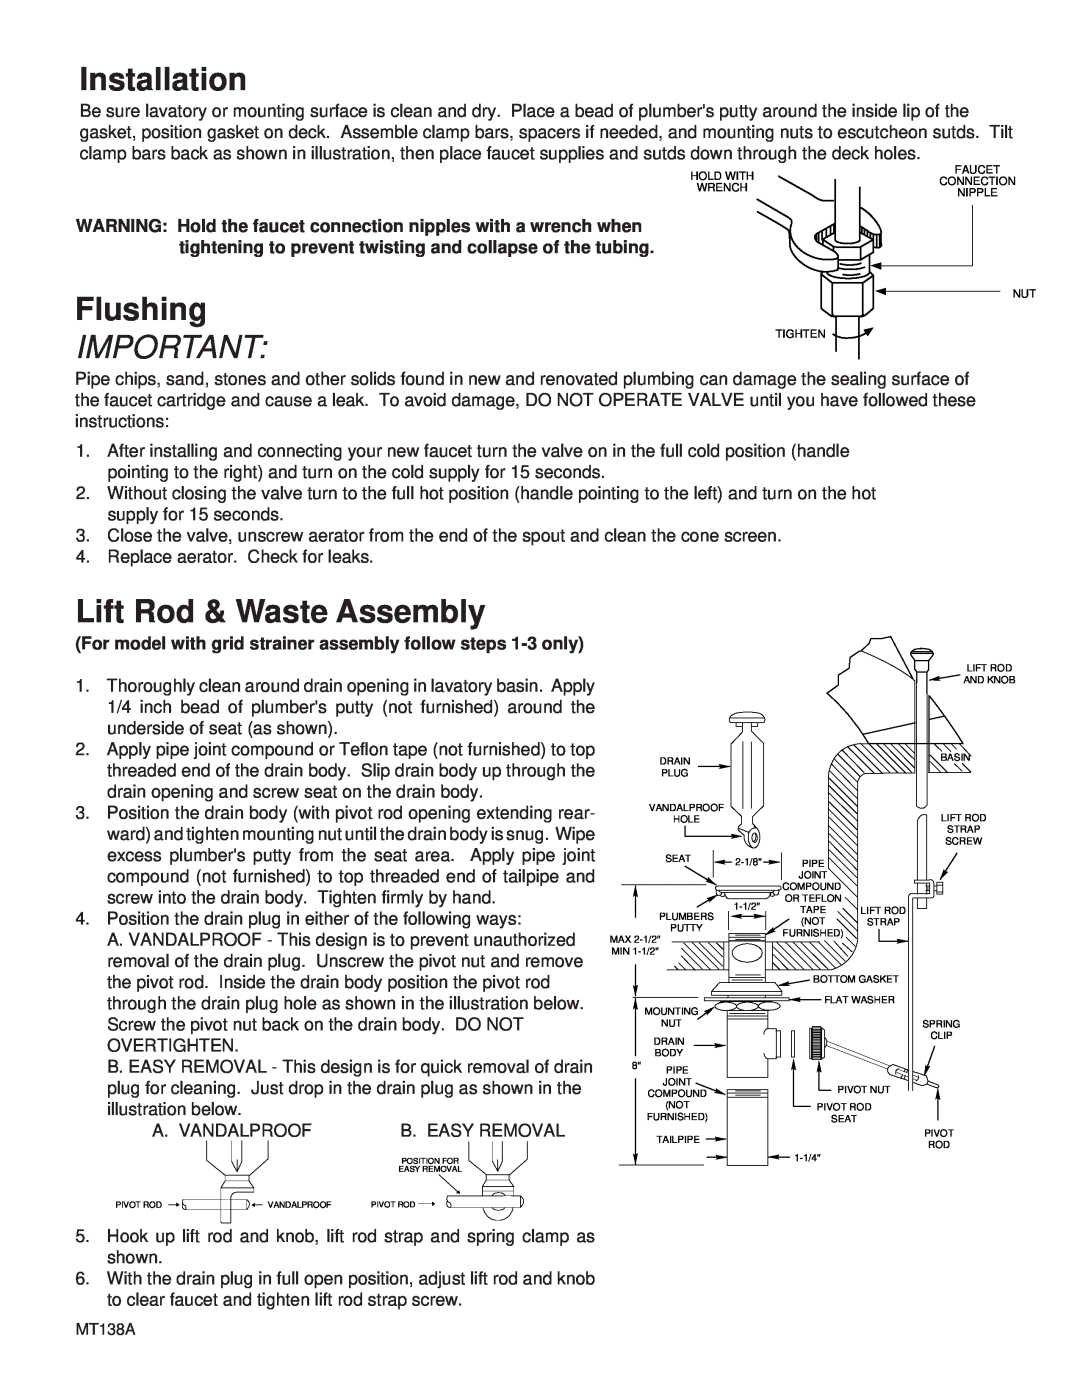 Moen MT138A installation instructions Installation, Flushing, Lift Rod & Waste Assembly 